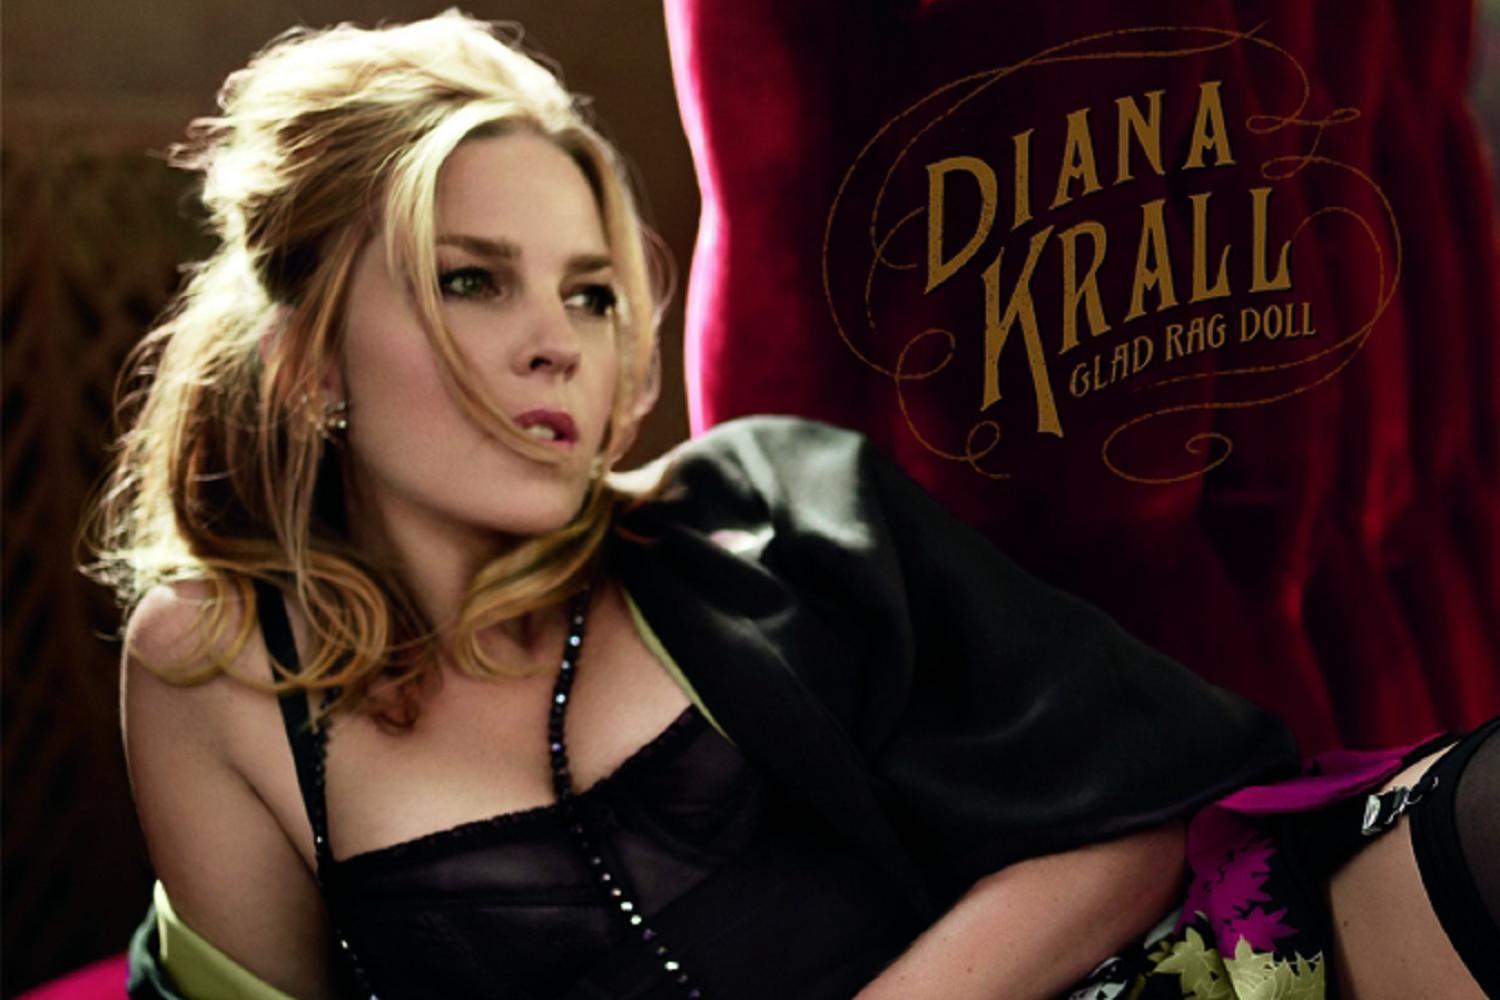 Diana Krall turns rockabilly queen